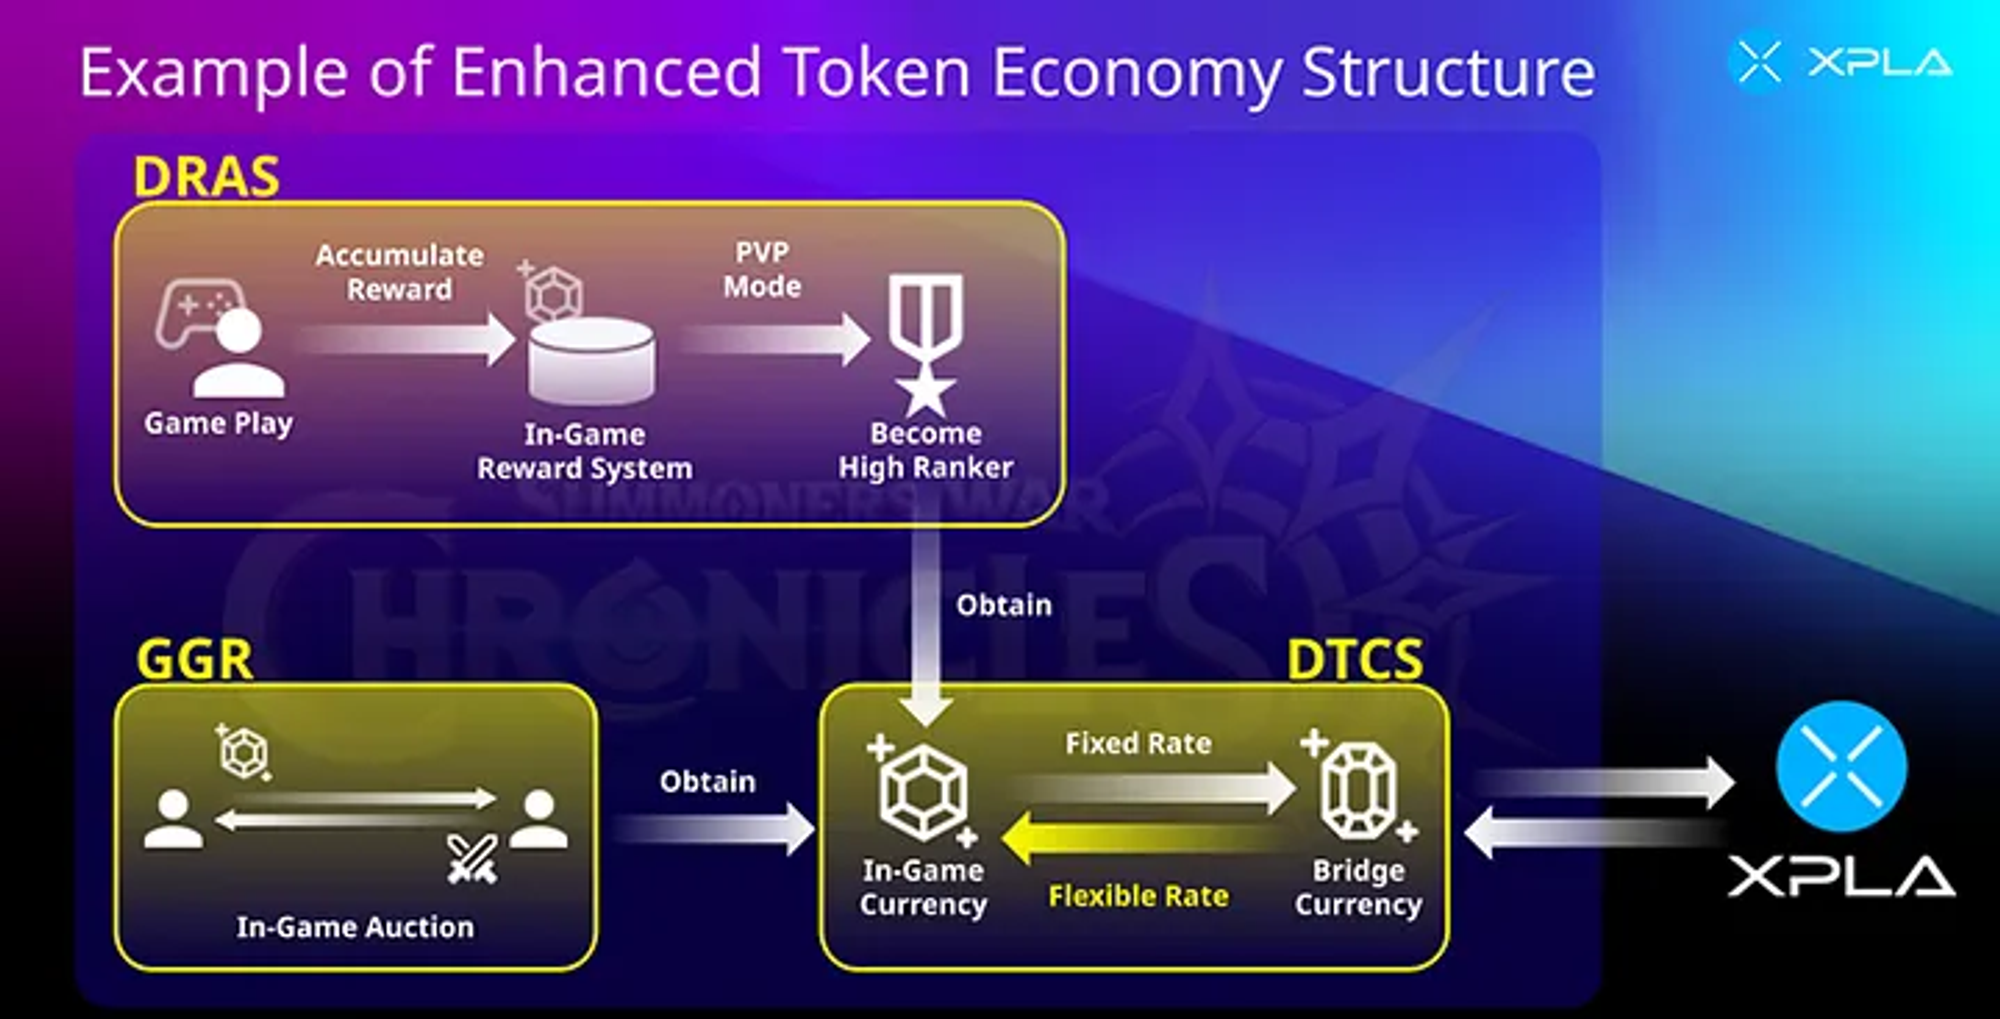 XPLA Token Economy Structure